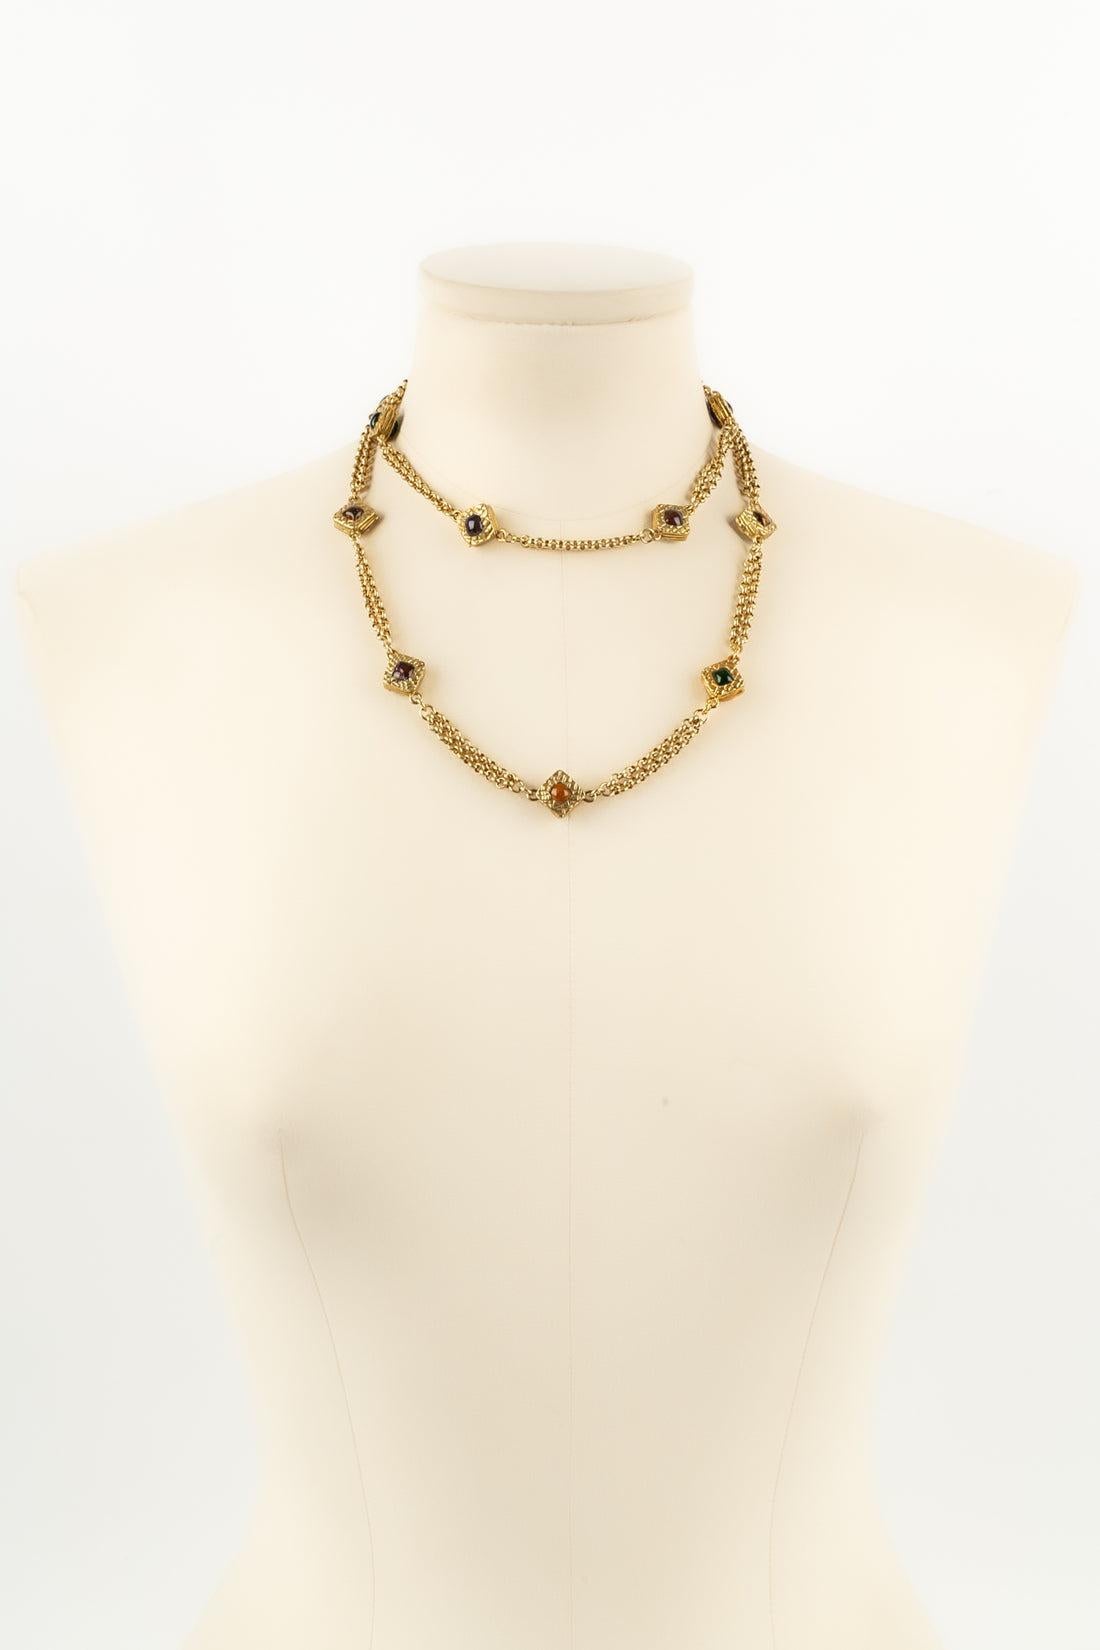 Chanel Chain Necklace, 1990s In Excellent Condition For Sale In SAINT-OUEN-SUR-SEINE, FR